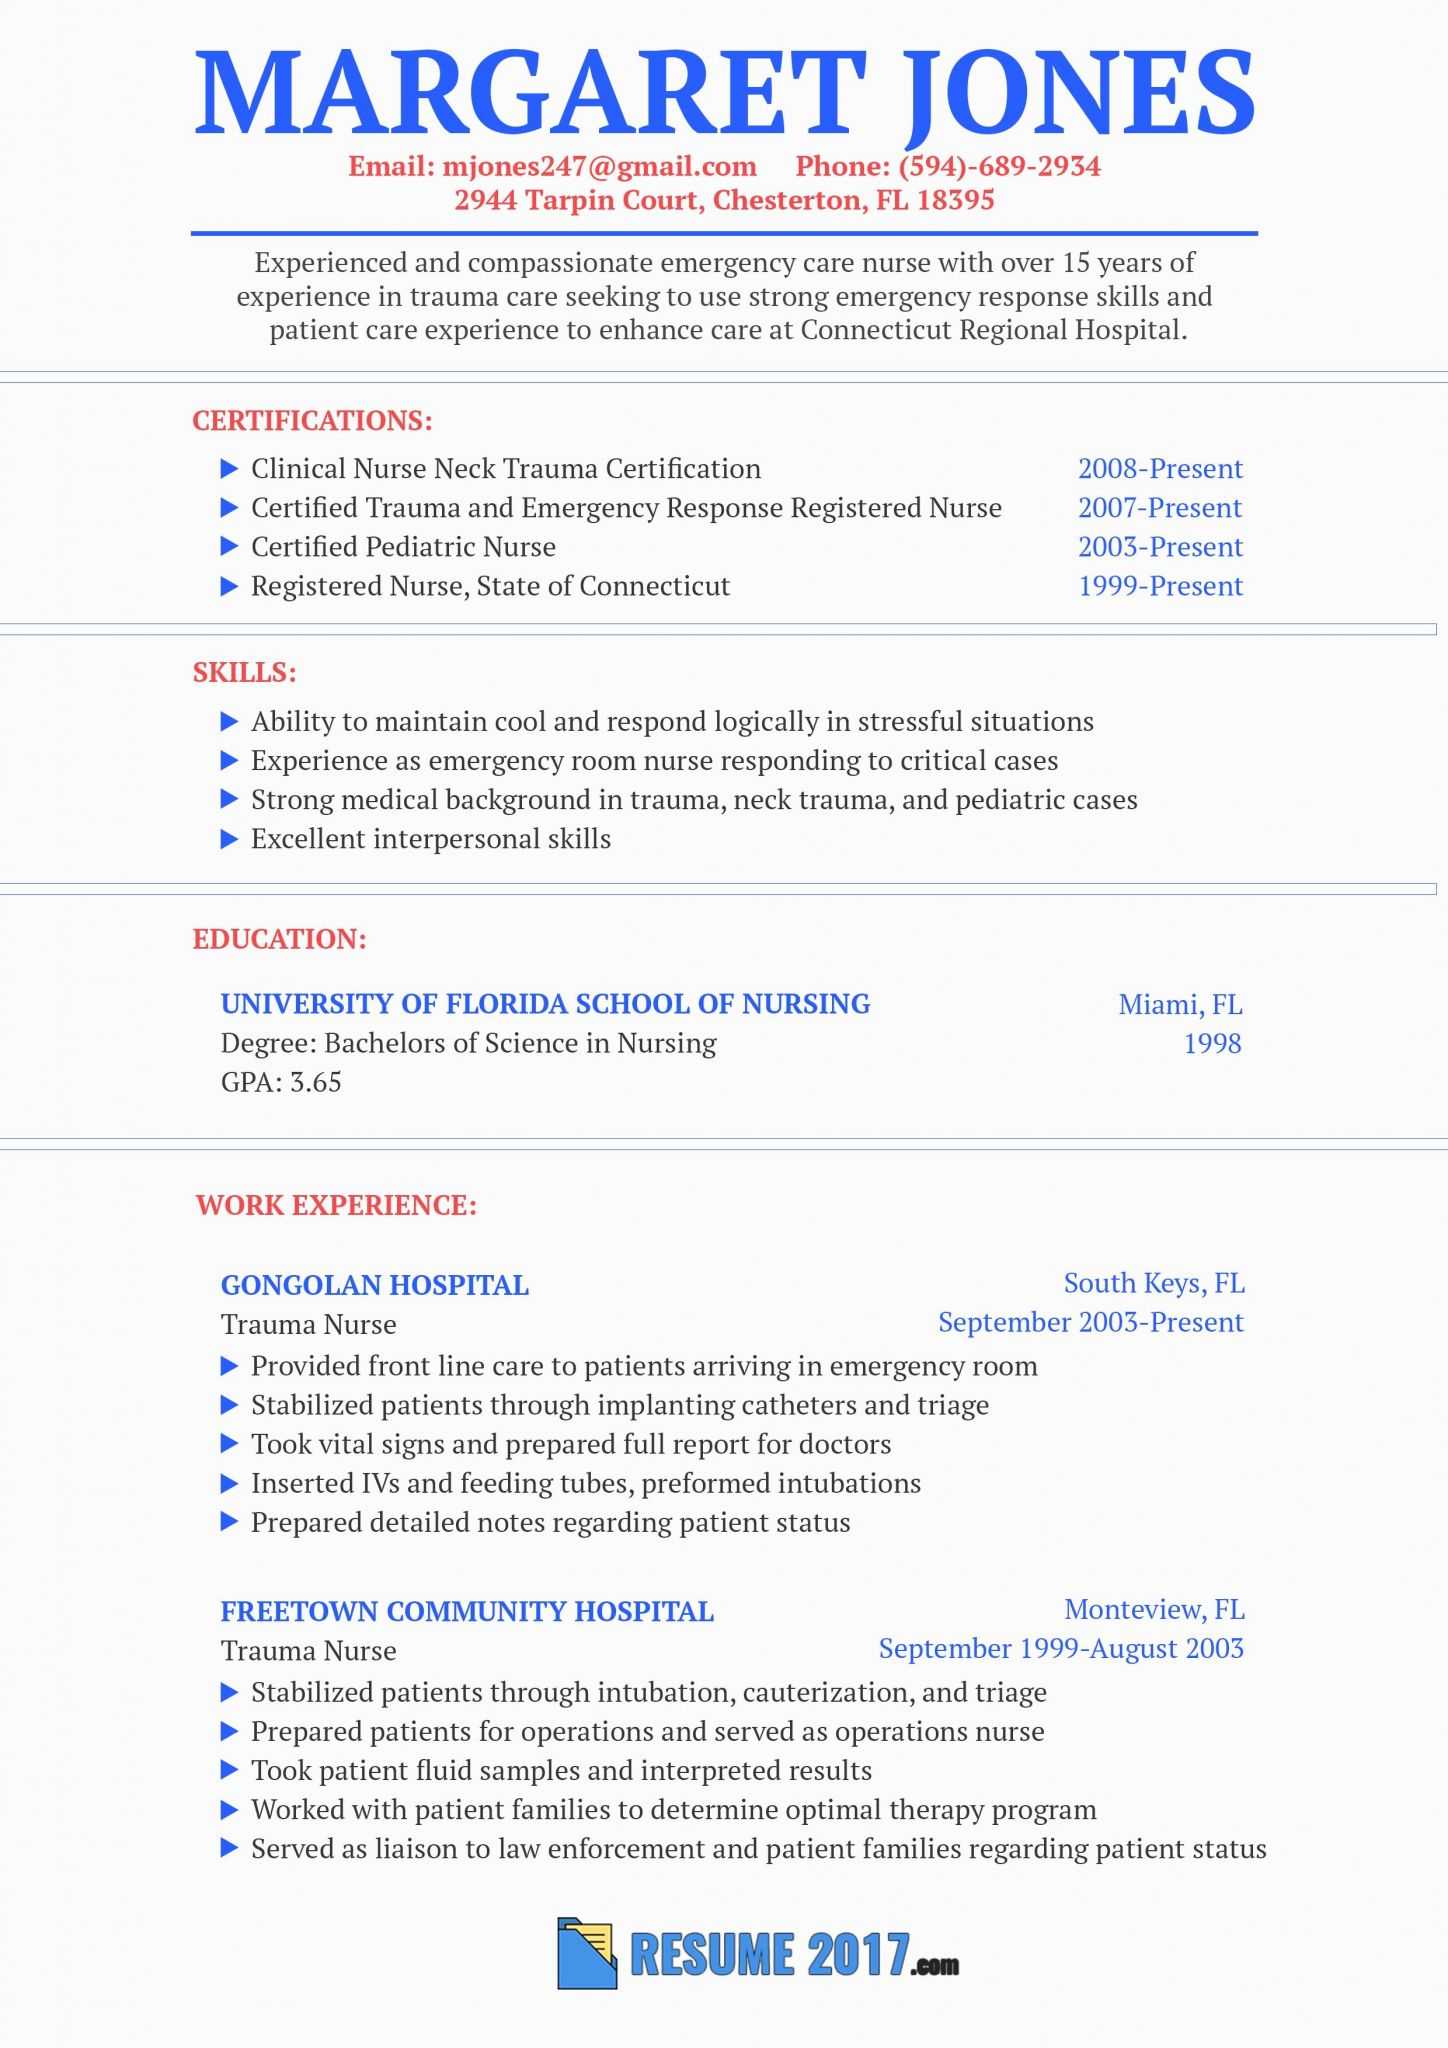 10 Handoff Report Templates For Nurses | Proposal Resume Intended For Nursing Handoff Report Template